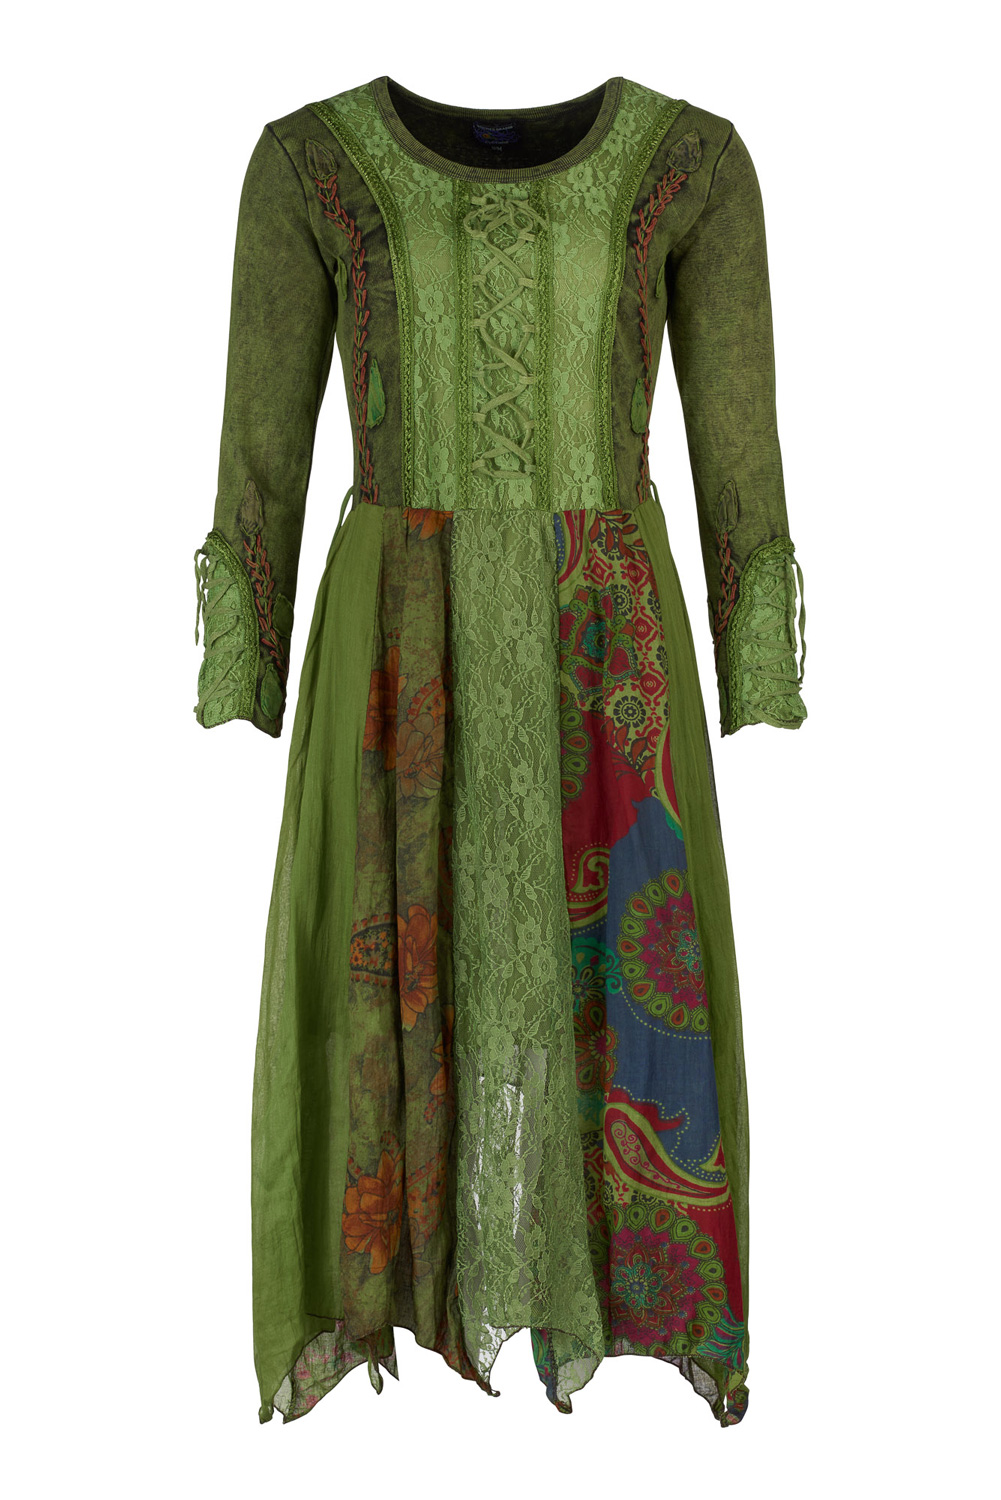 Wicked Dragon Clothing - Bohemian style long sleeve dress